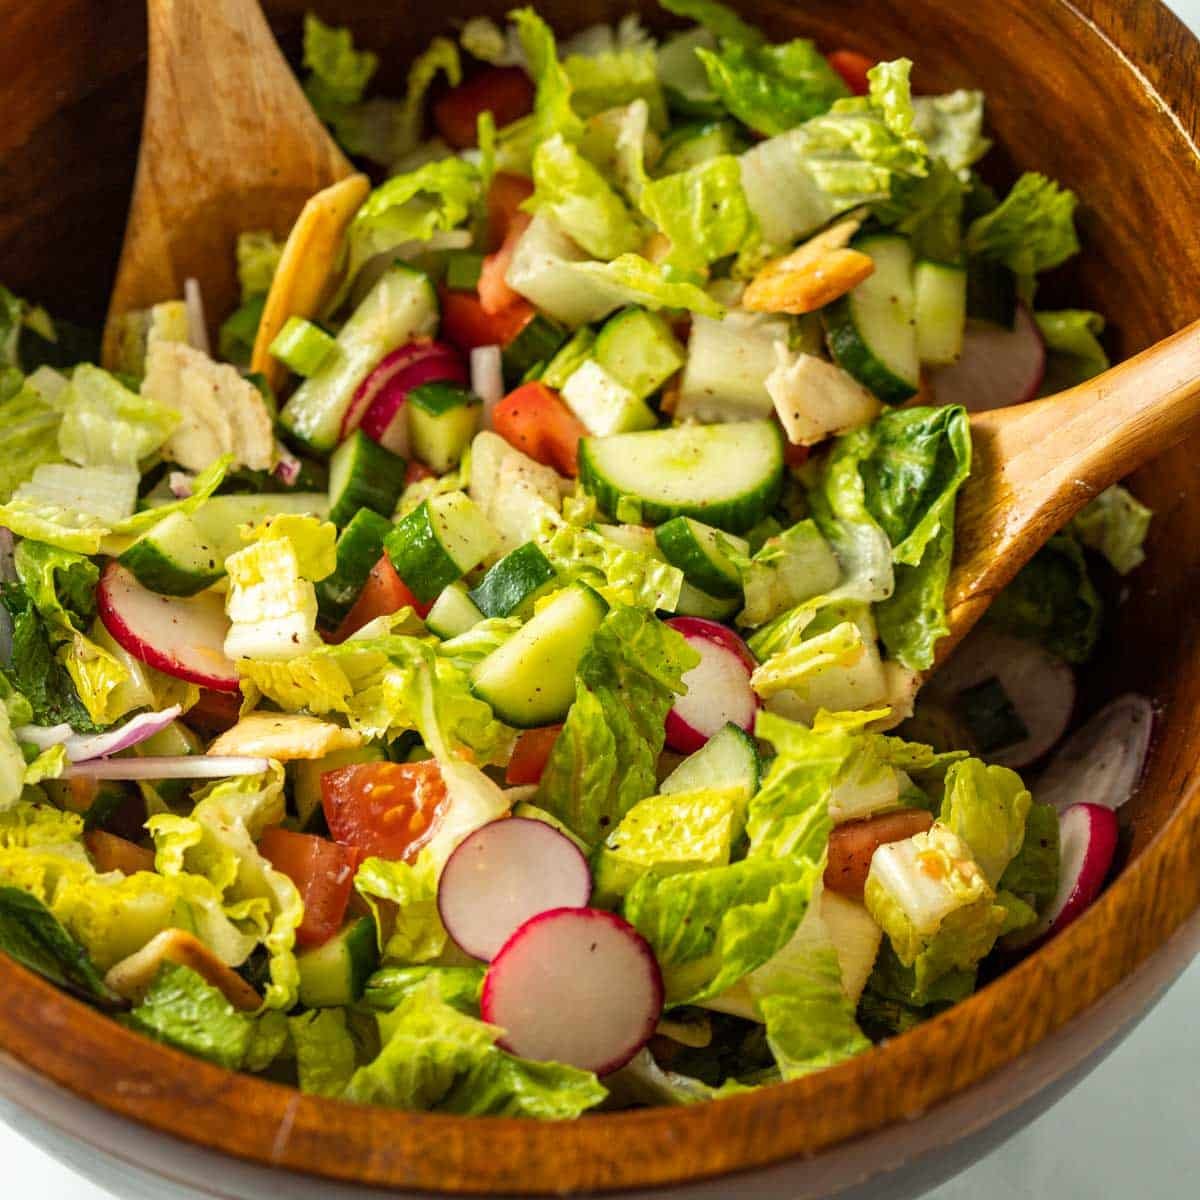 Fattoush salad in wood salad bowl.
